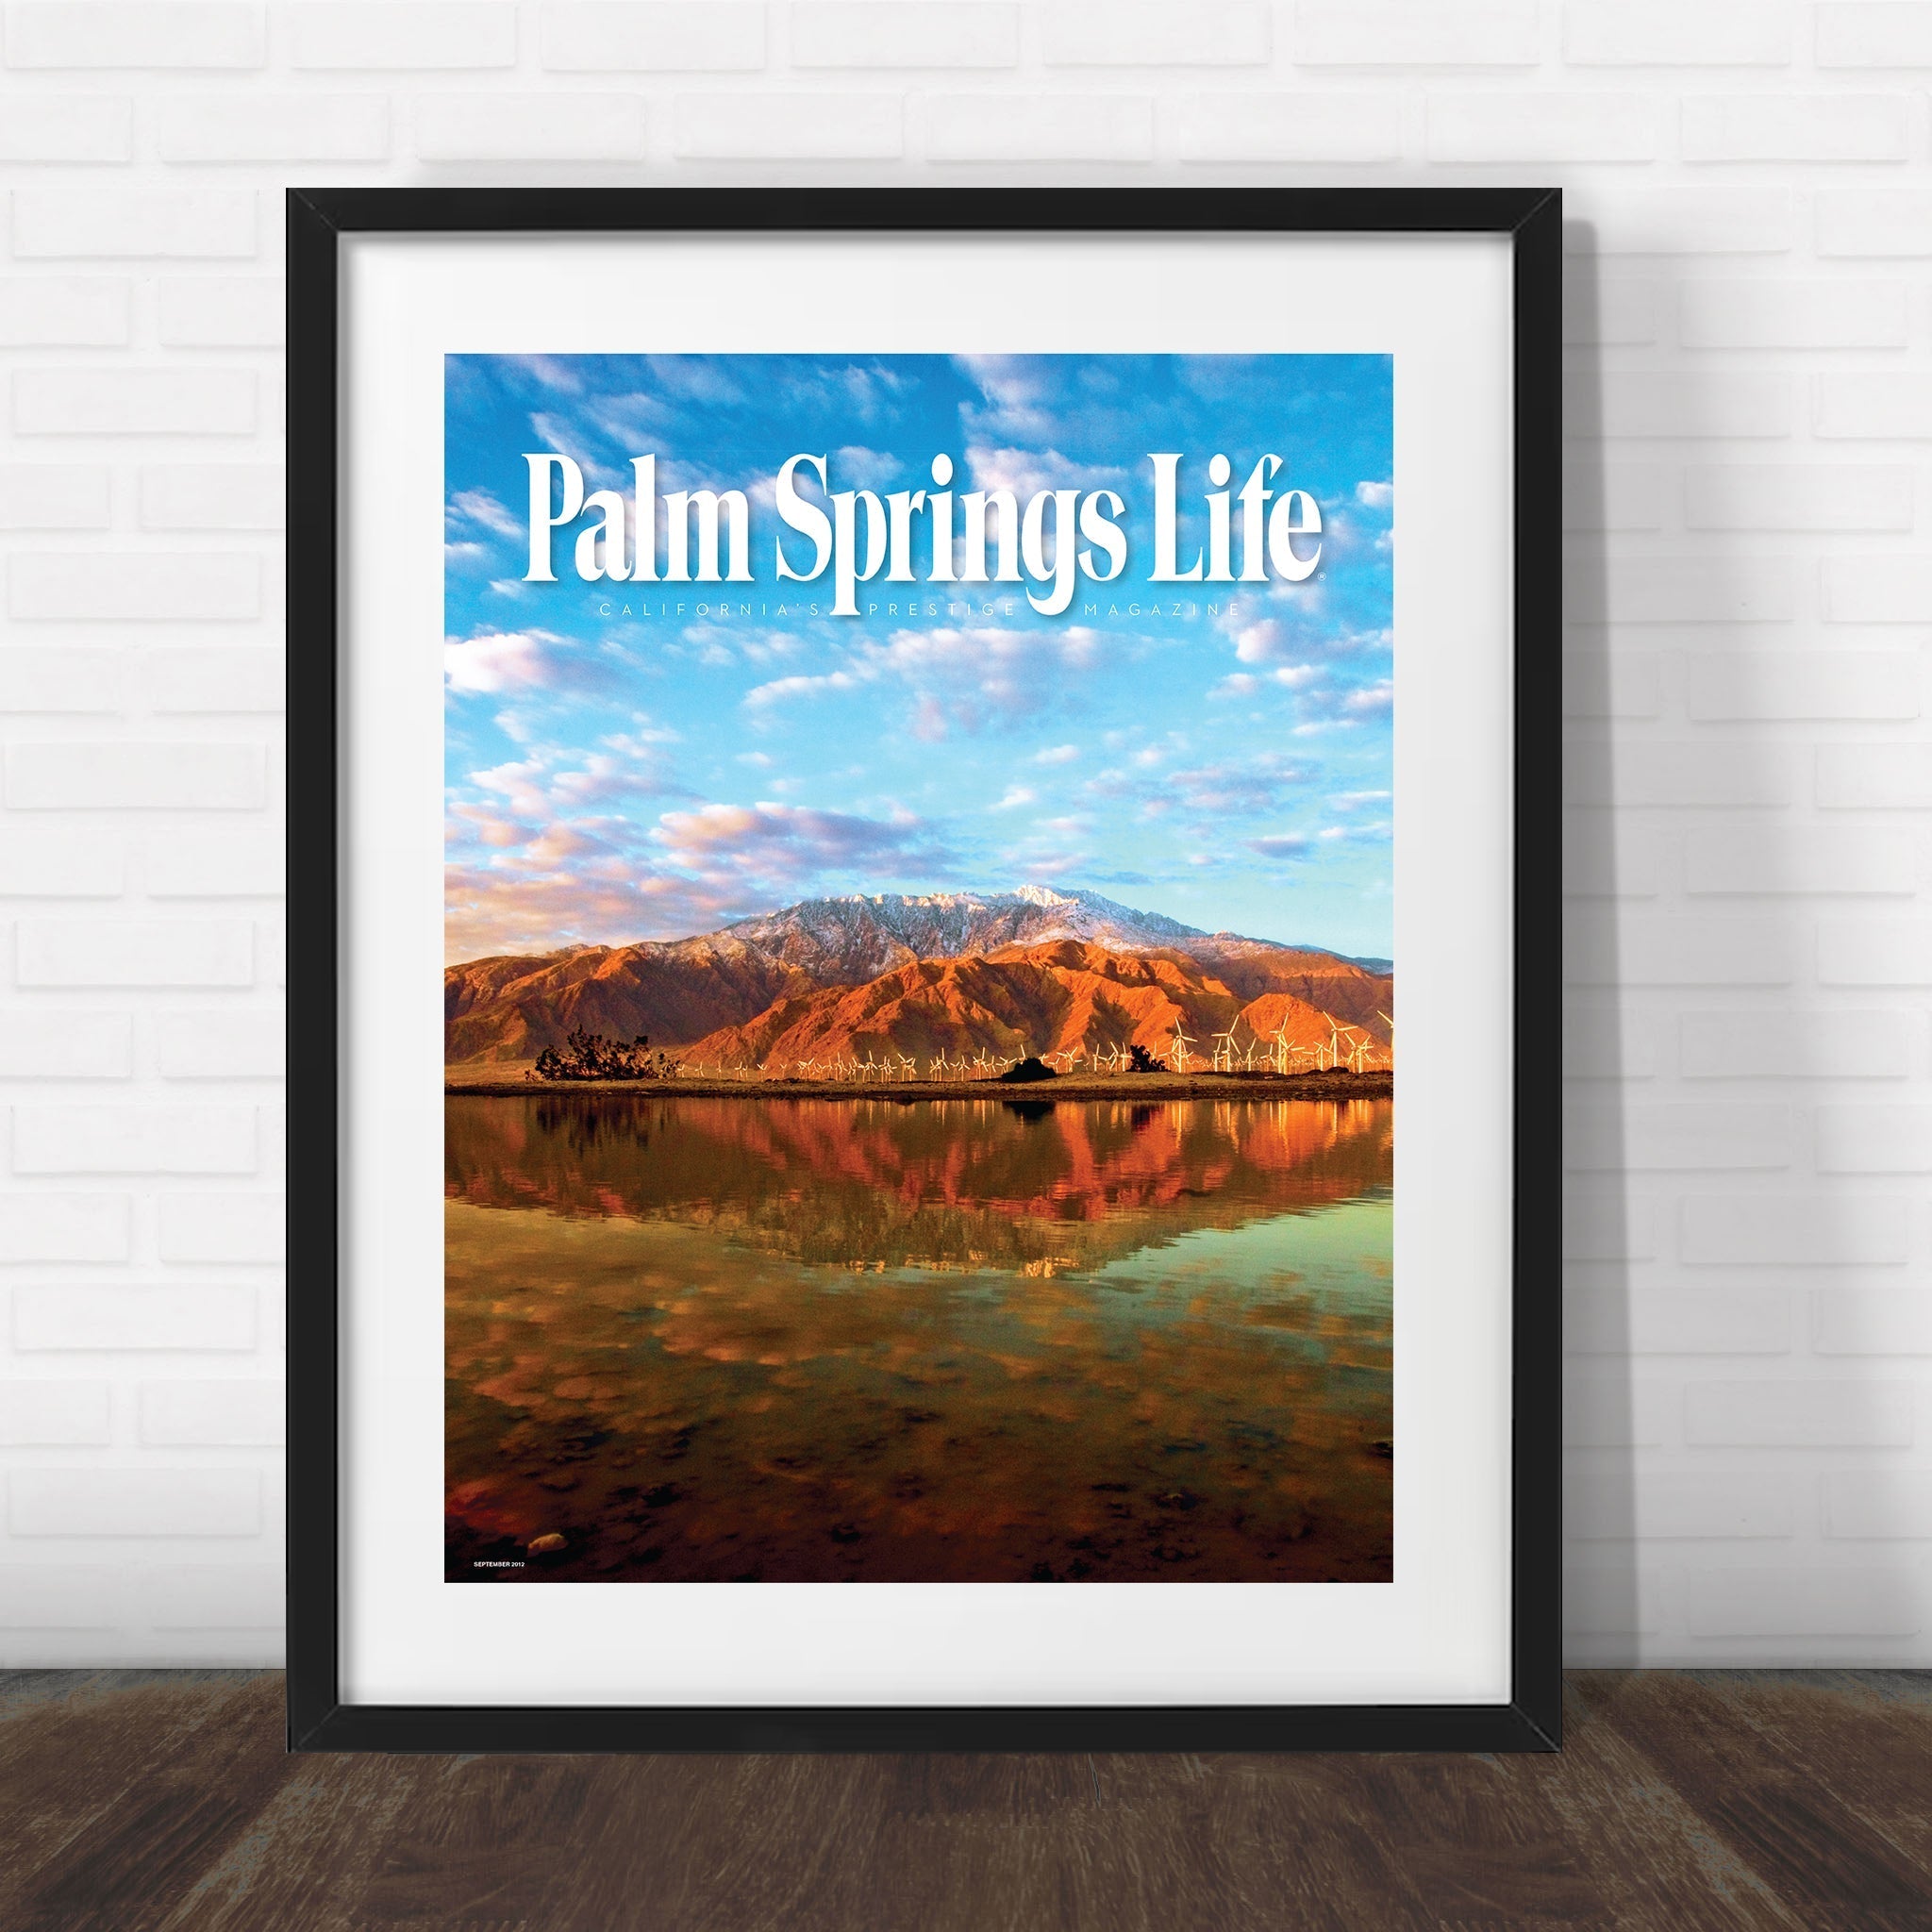 Palm Springs Life - September 2012 - Cover Poster